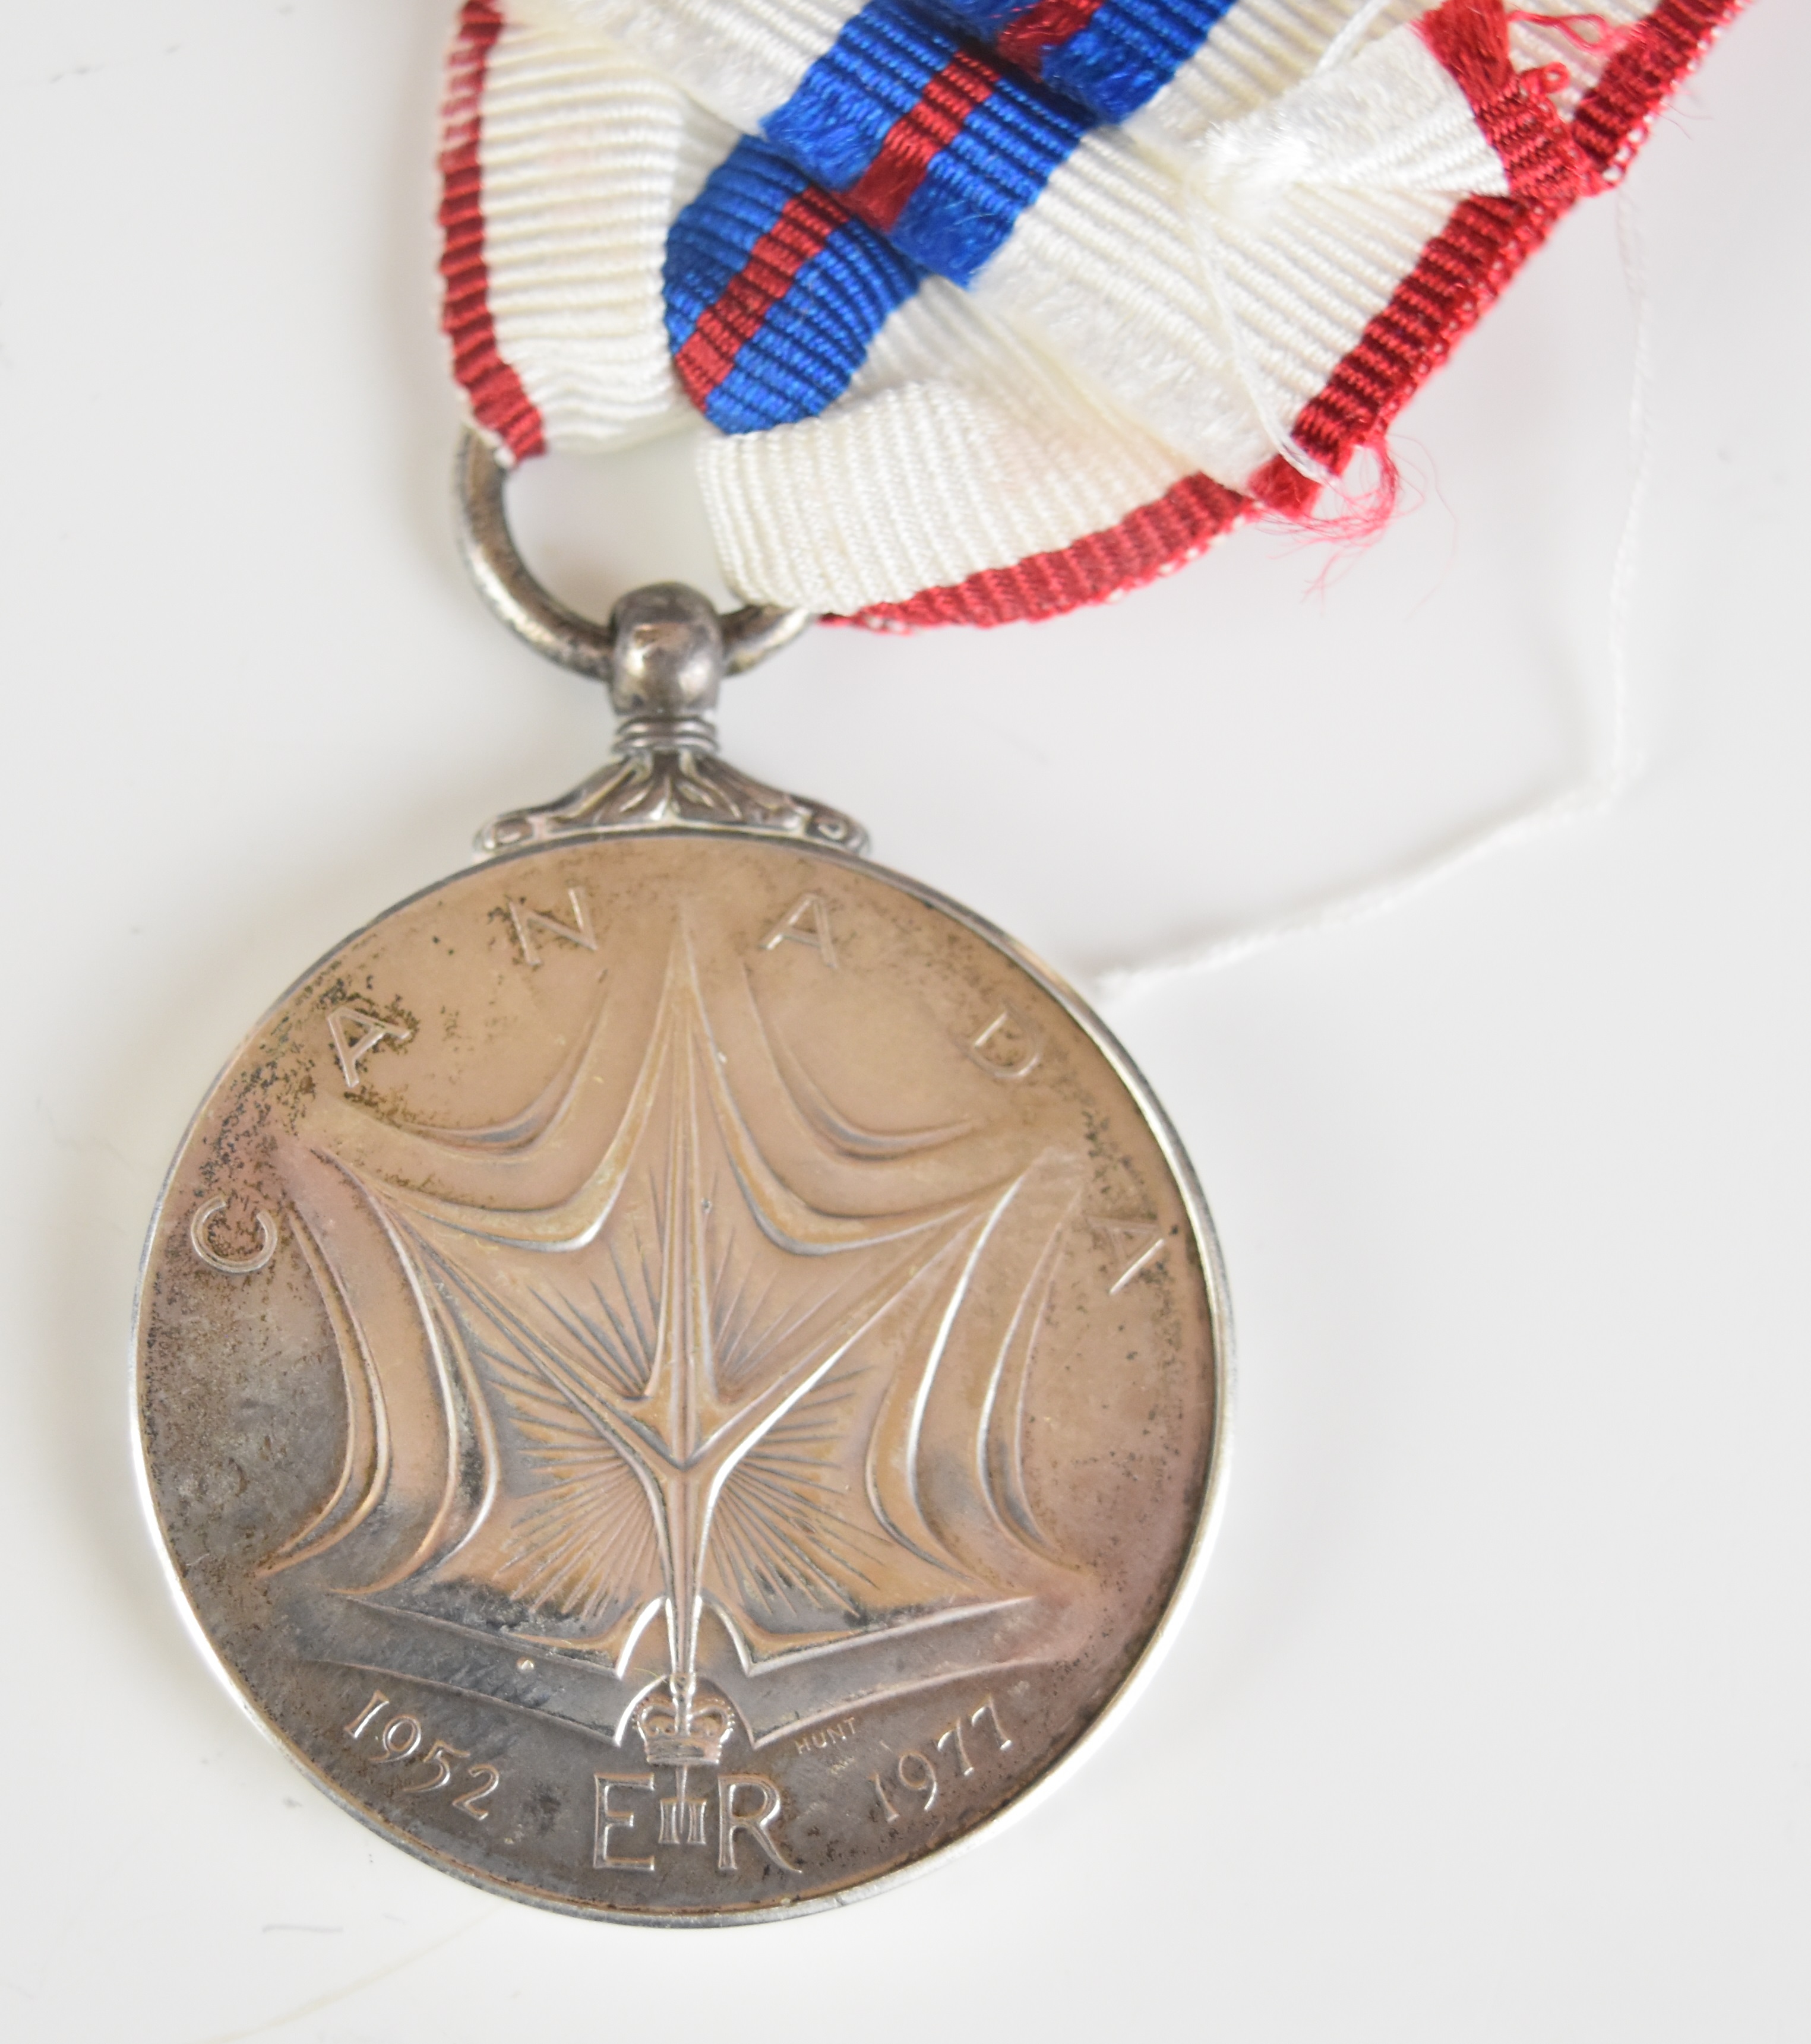 Elizabeth II Silver Jubilee Medal, Canadian issue - Image 4 of 4